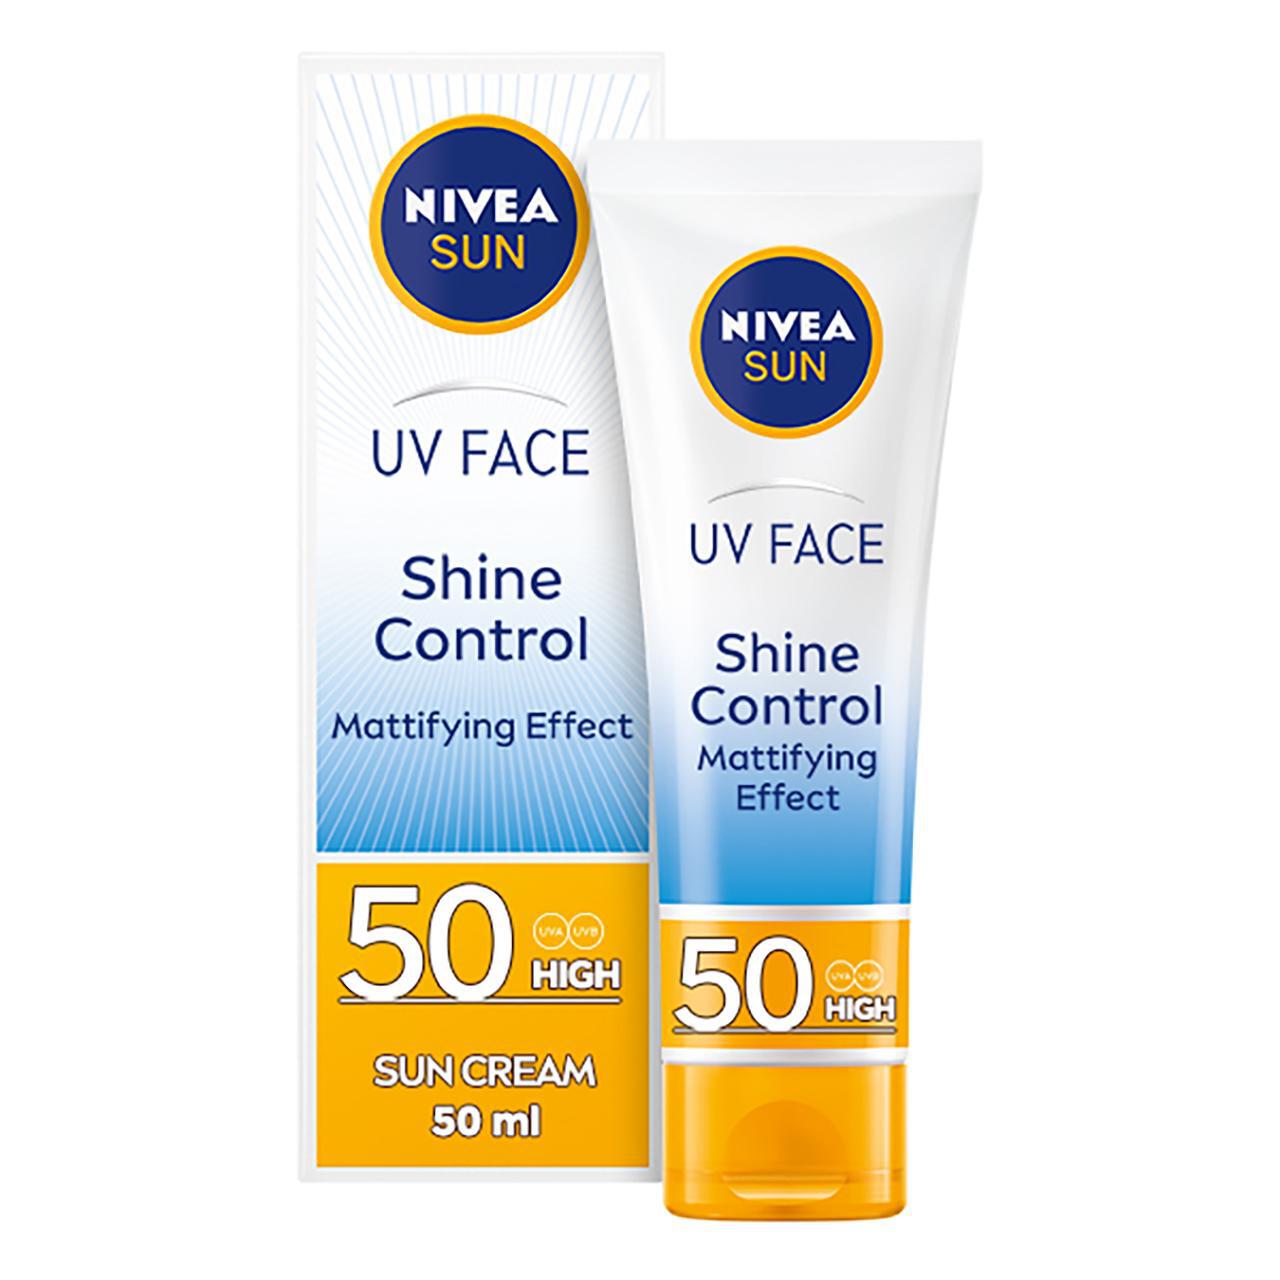 NIVEA SUN UV Face SPF 50 Sun Cream Shine Control 50ml